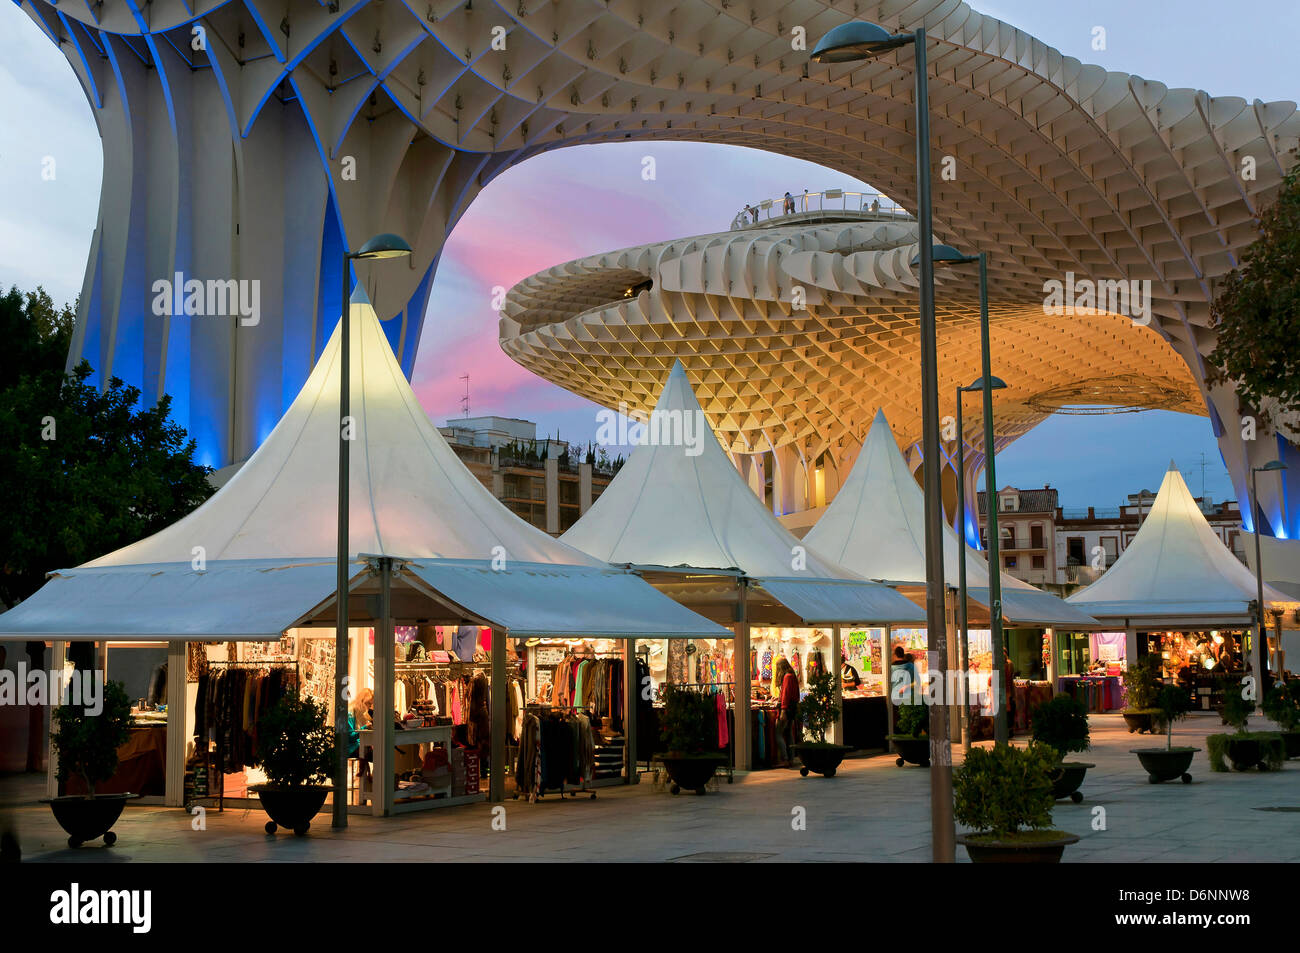 Encarnacion Square, Metropol Parasol and artisan kiosks, Seville, Region of Andalusia, Spain Stock Photo